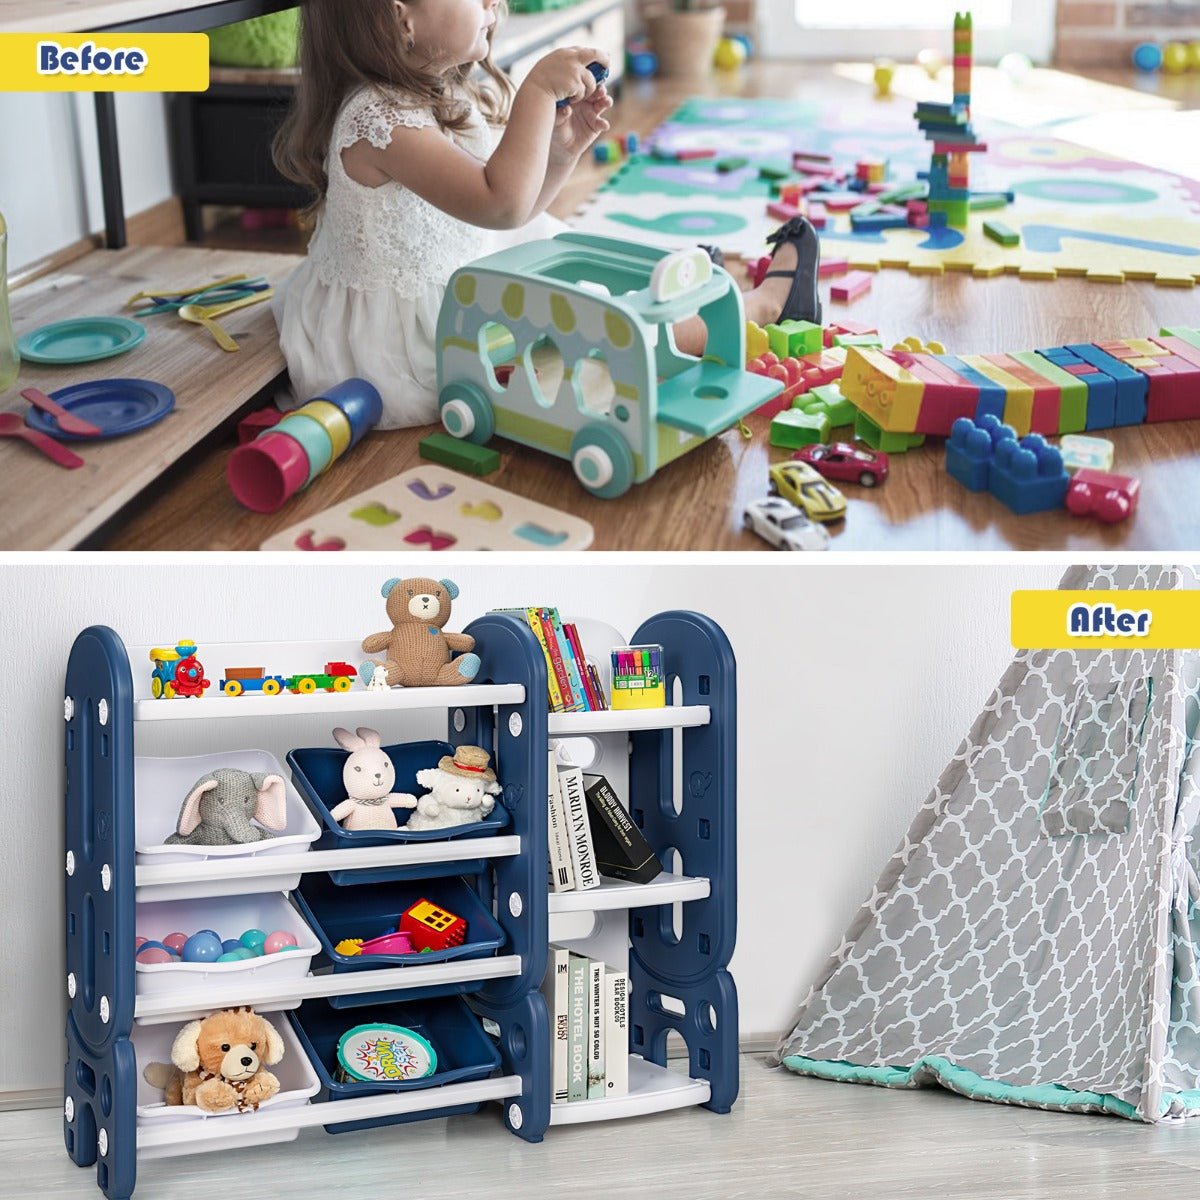 Child's Bedroom Bliss - Blue Toy Storage Organizer and Bookshelf